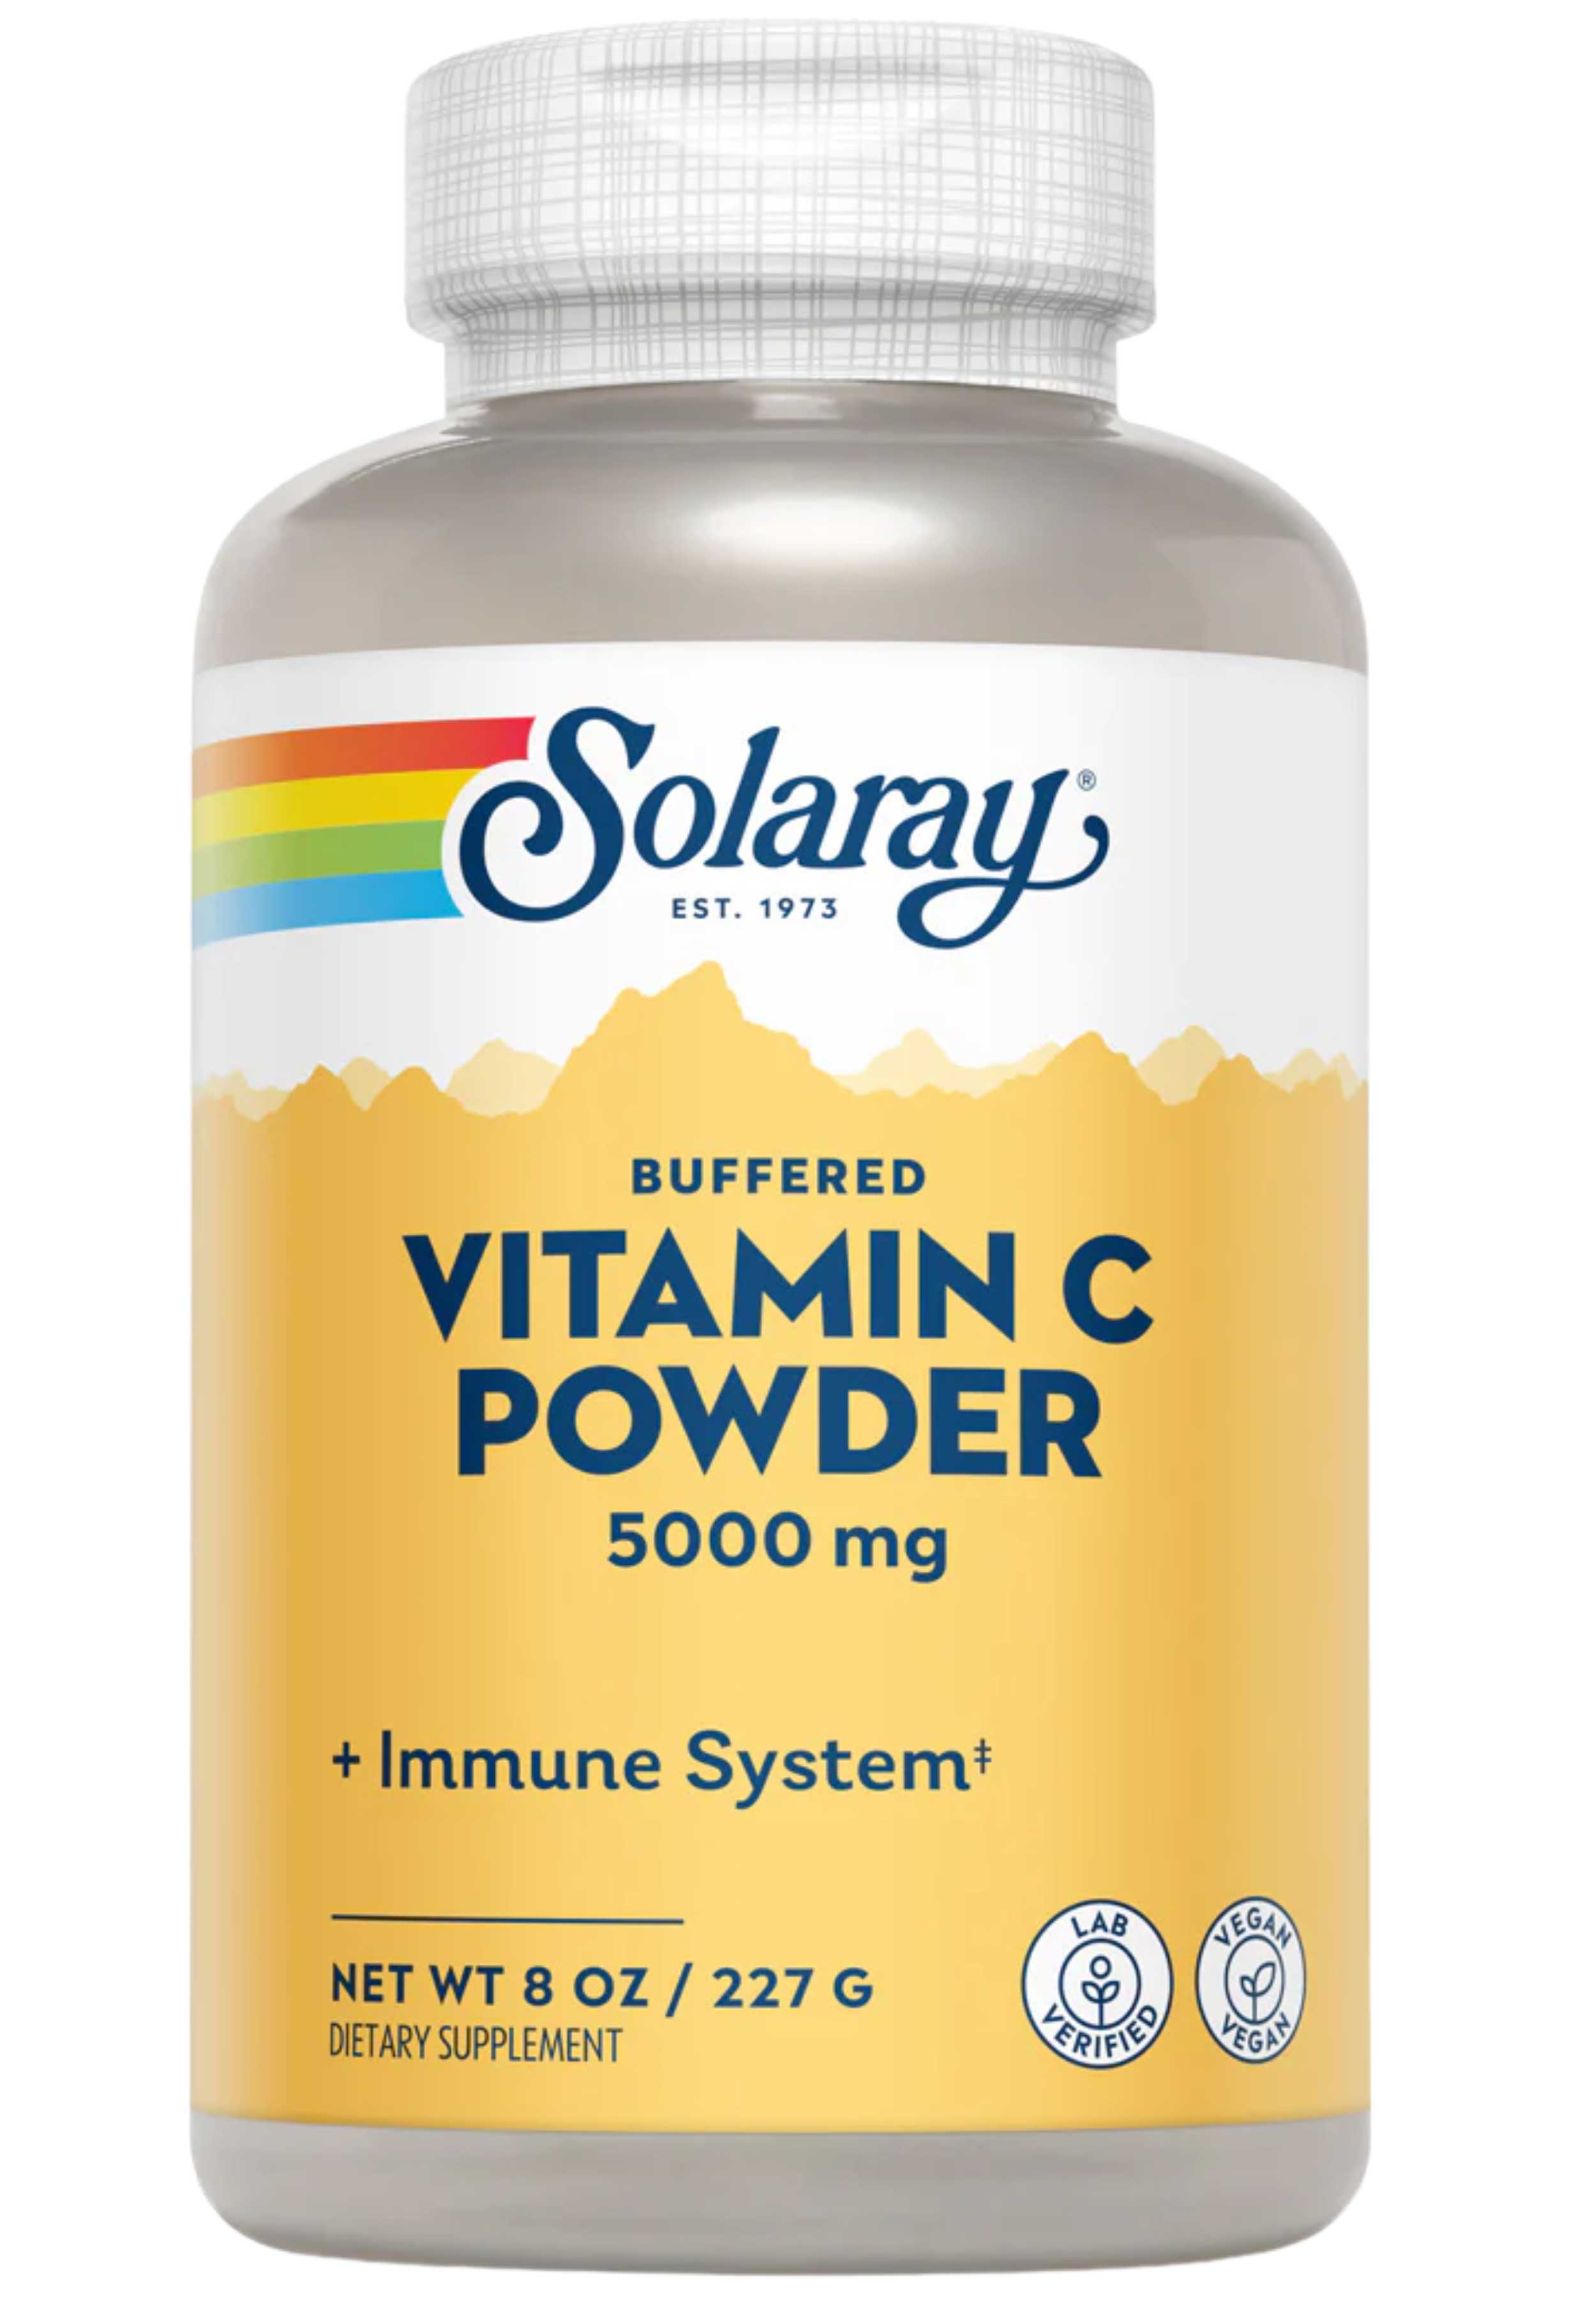 Solaray Buffered Vitamin C Powder 5000 mg